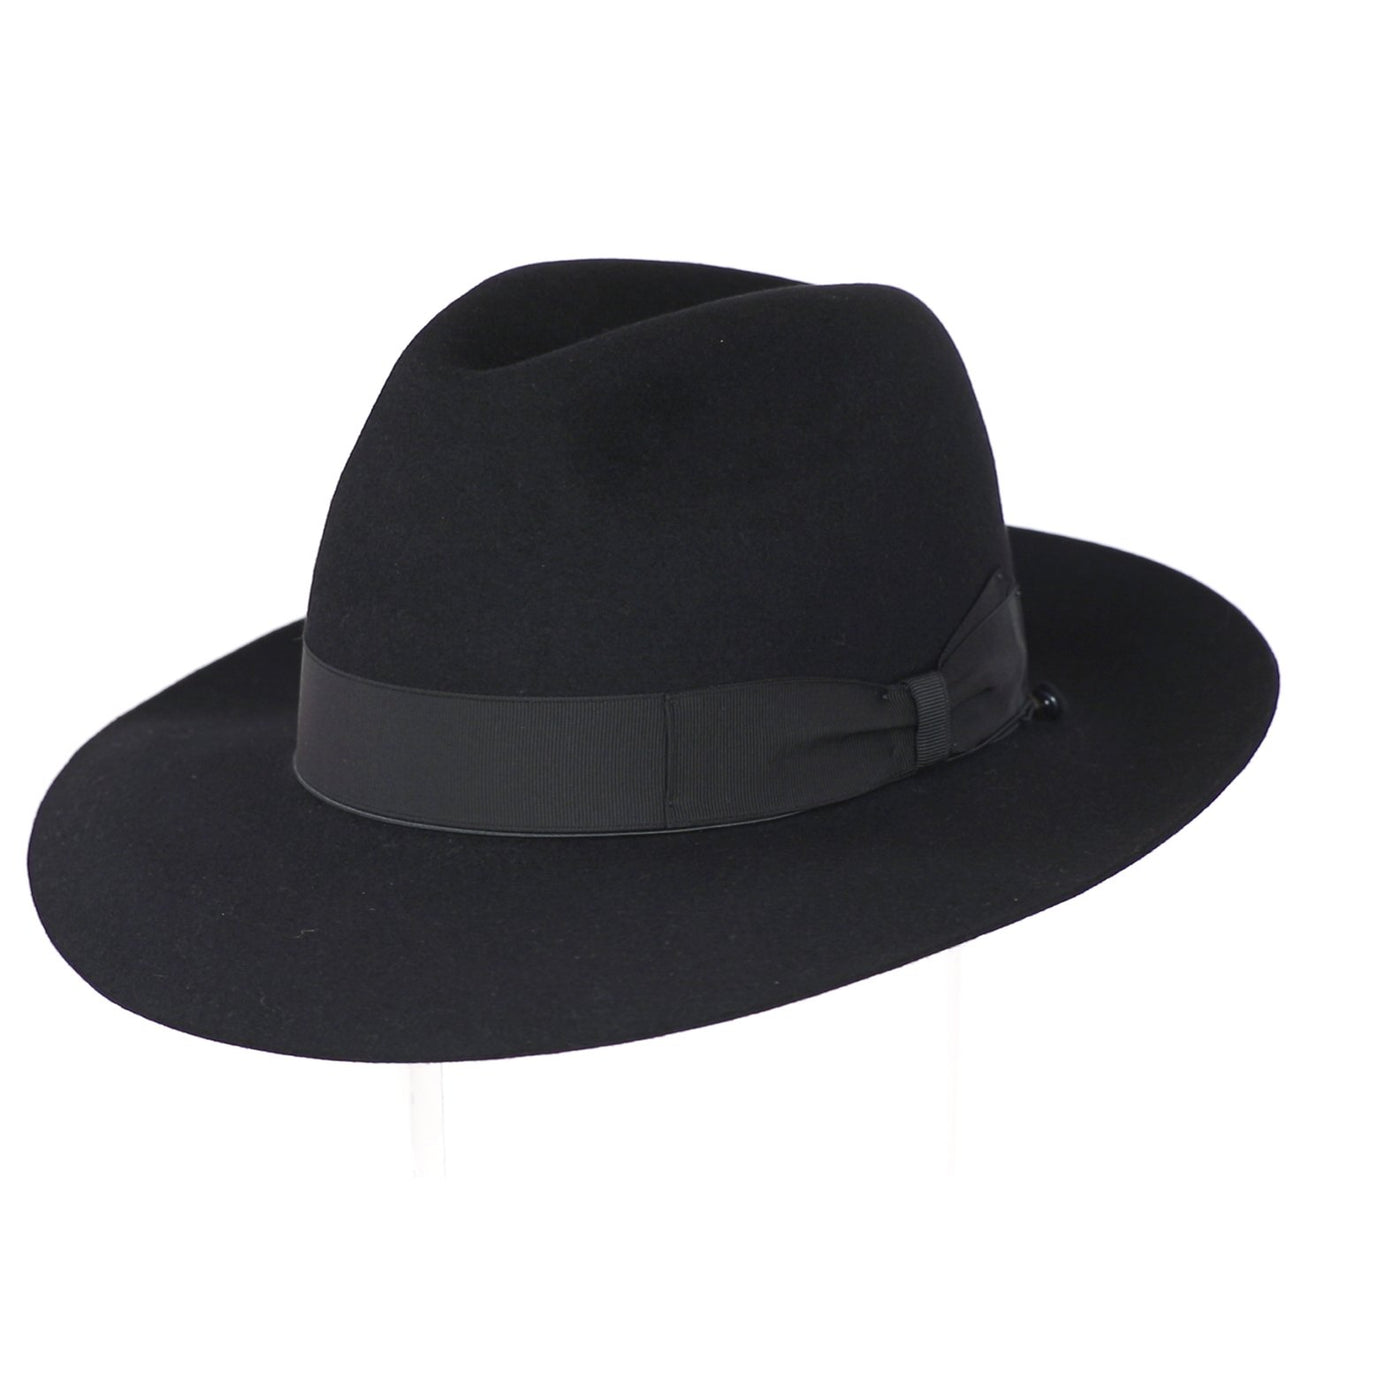 Andelli 234 - Black, product_type] - Borsalino for Atica fedora hat